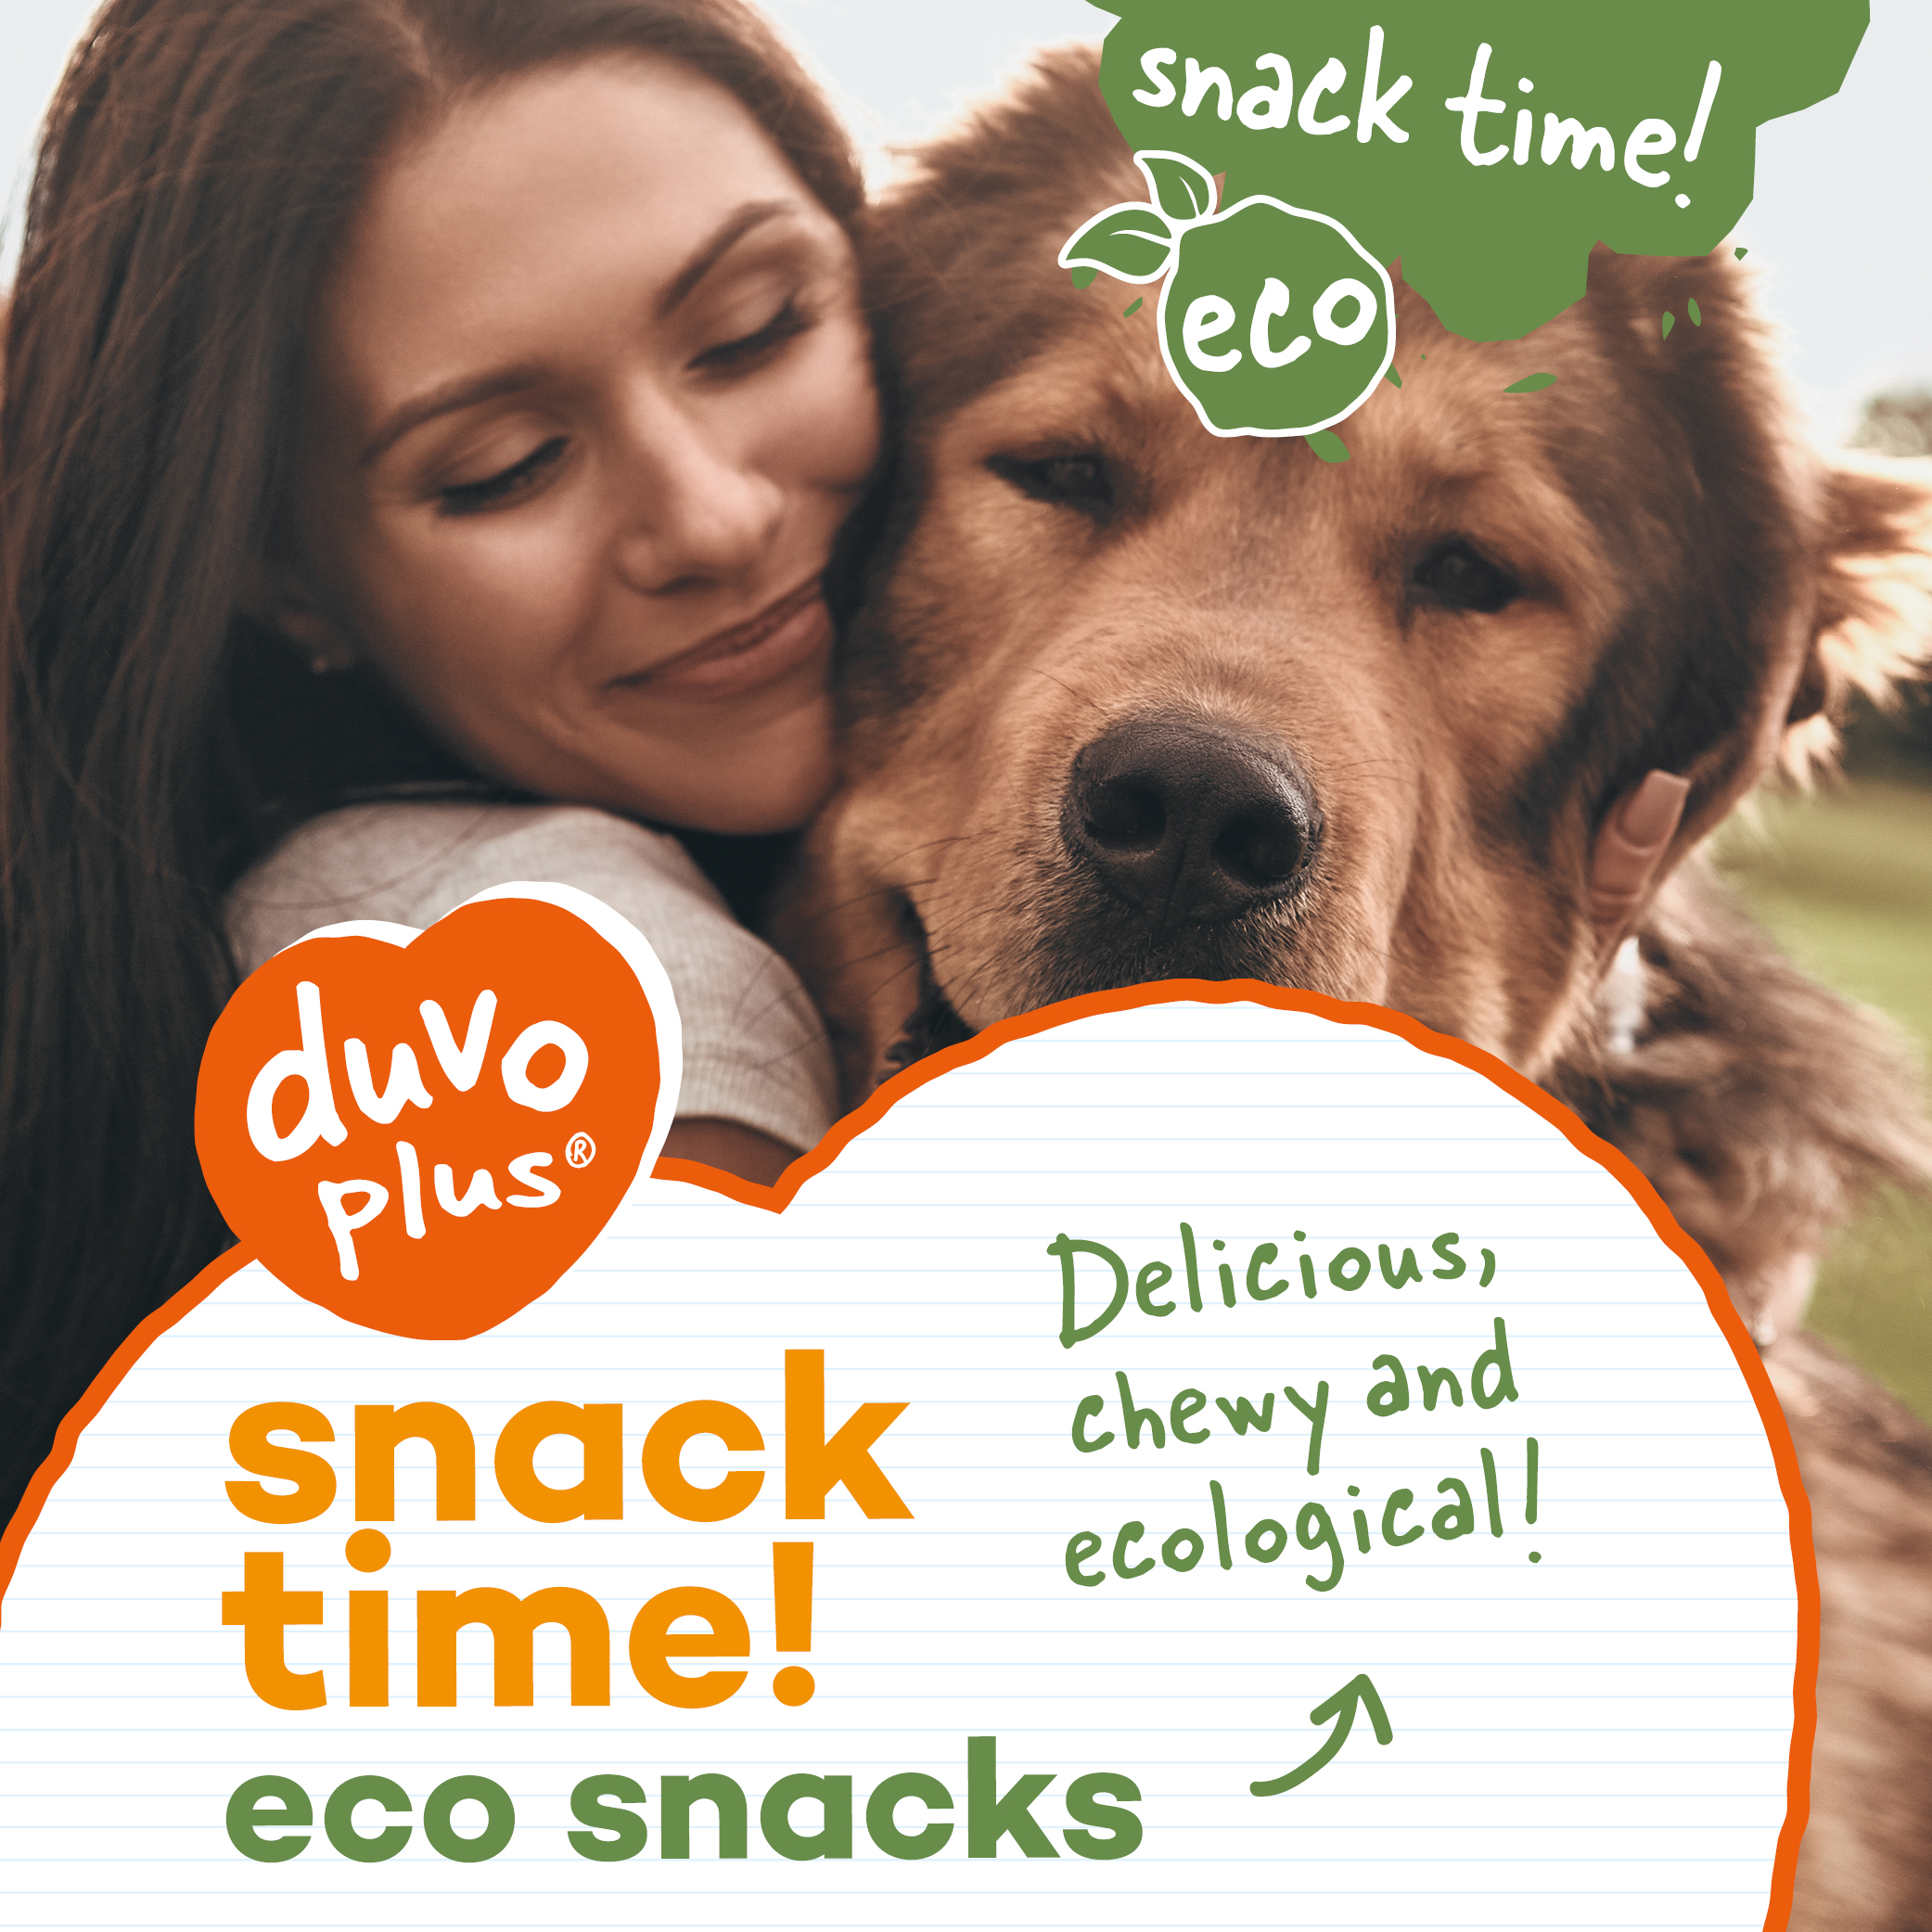 Eco snacks